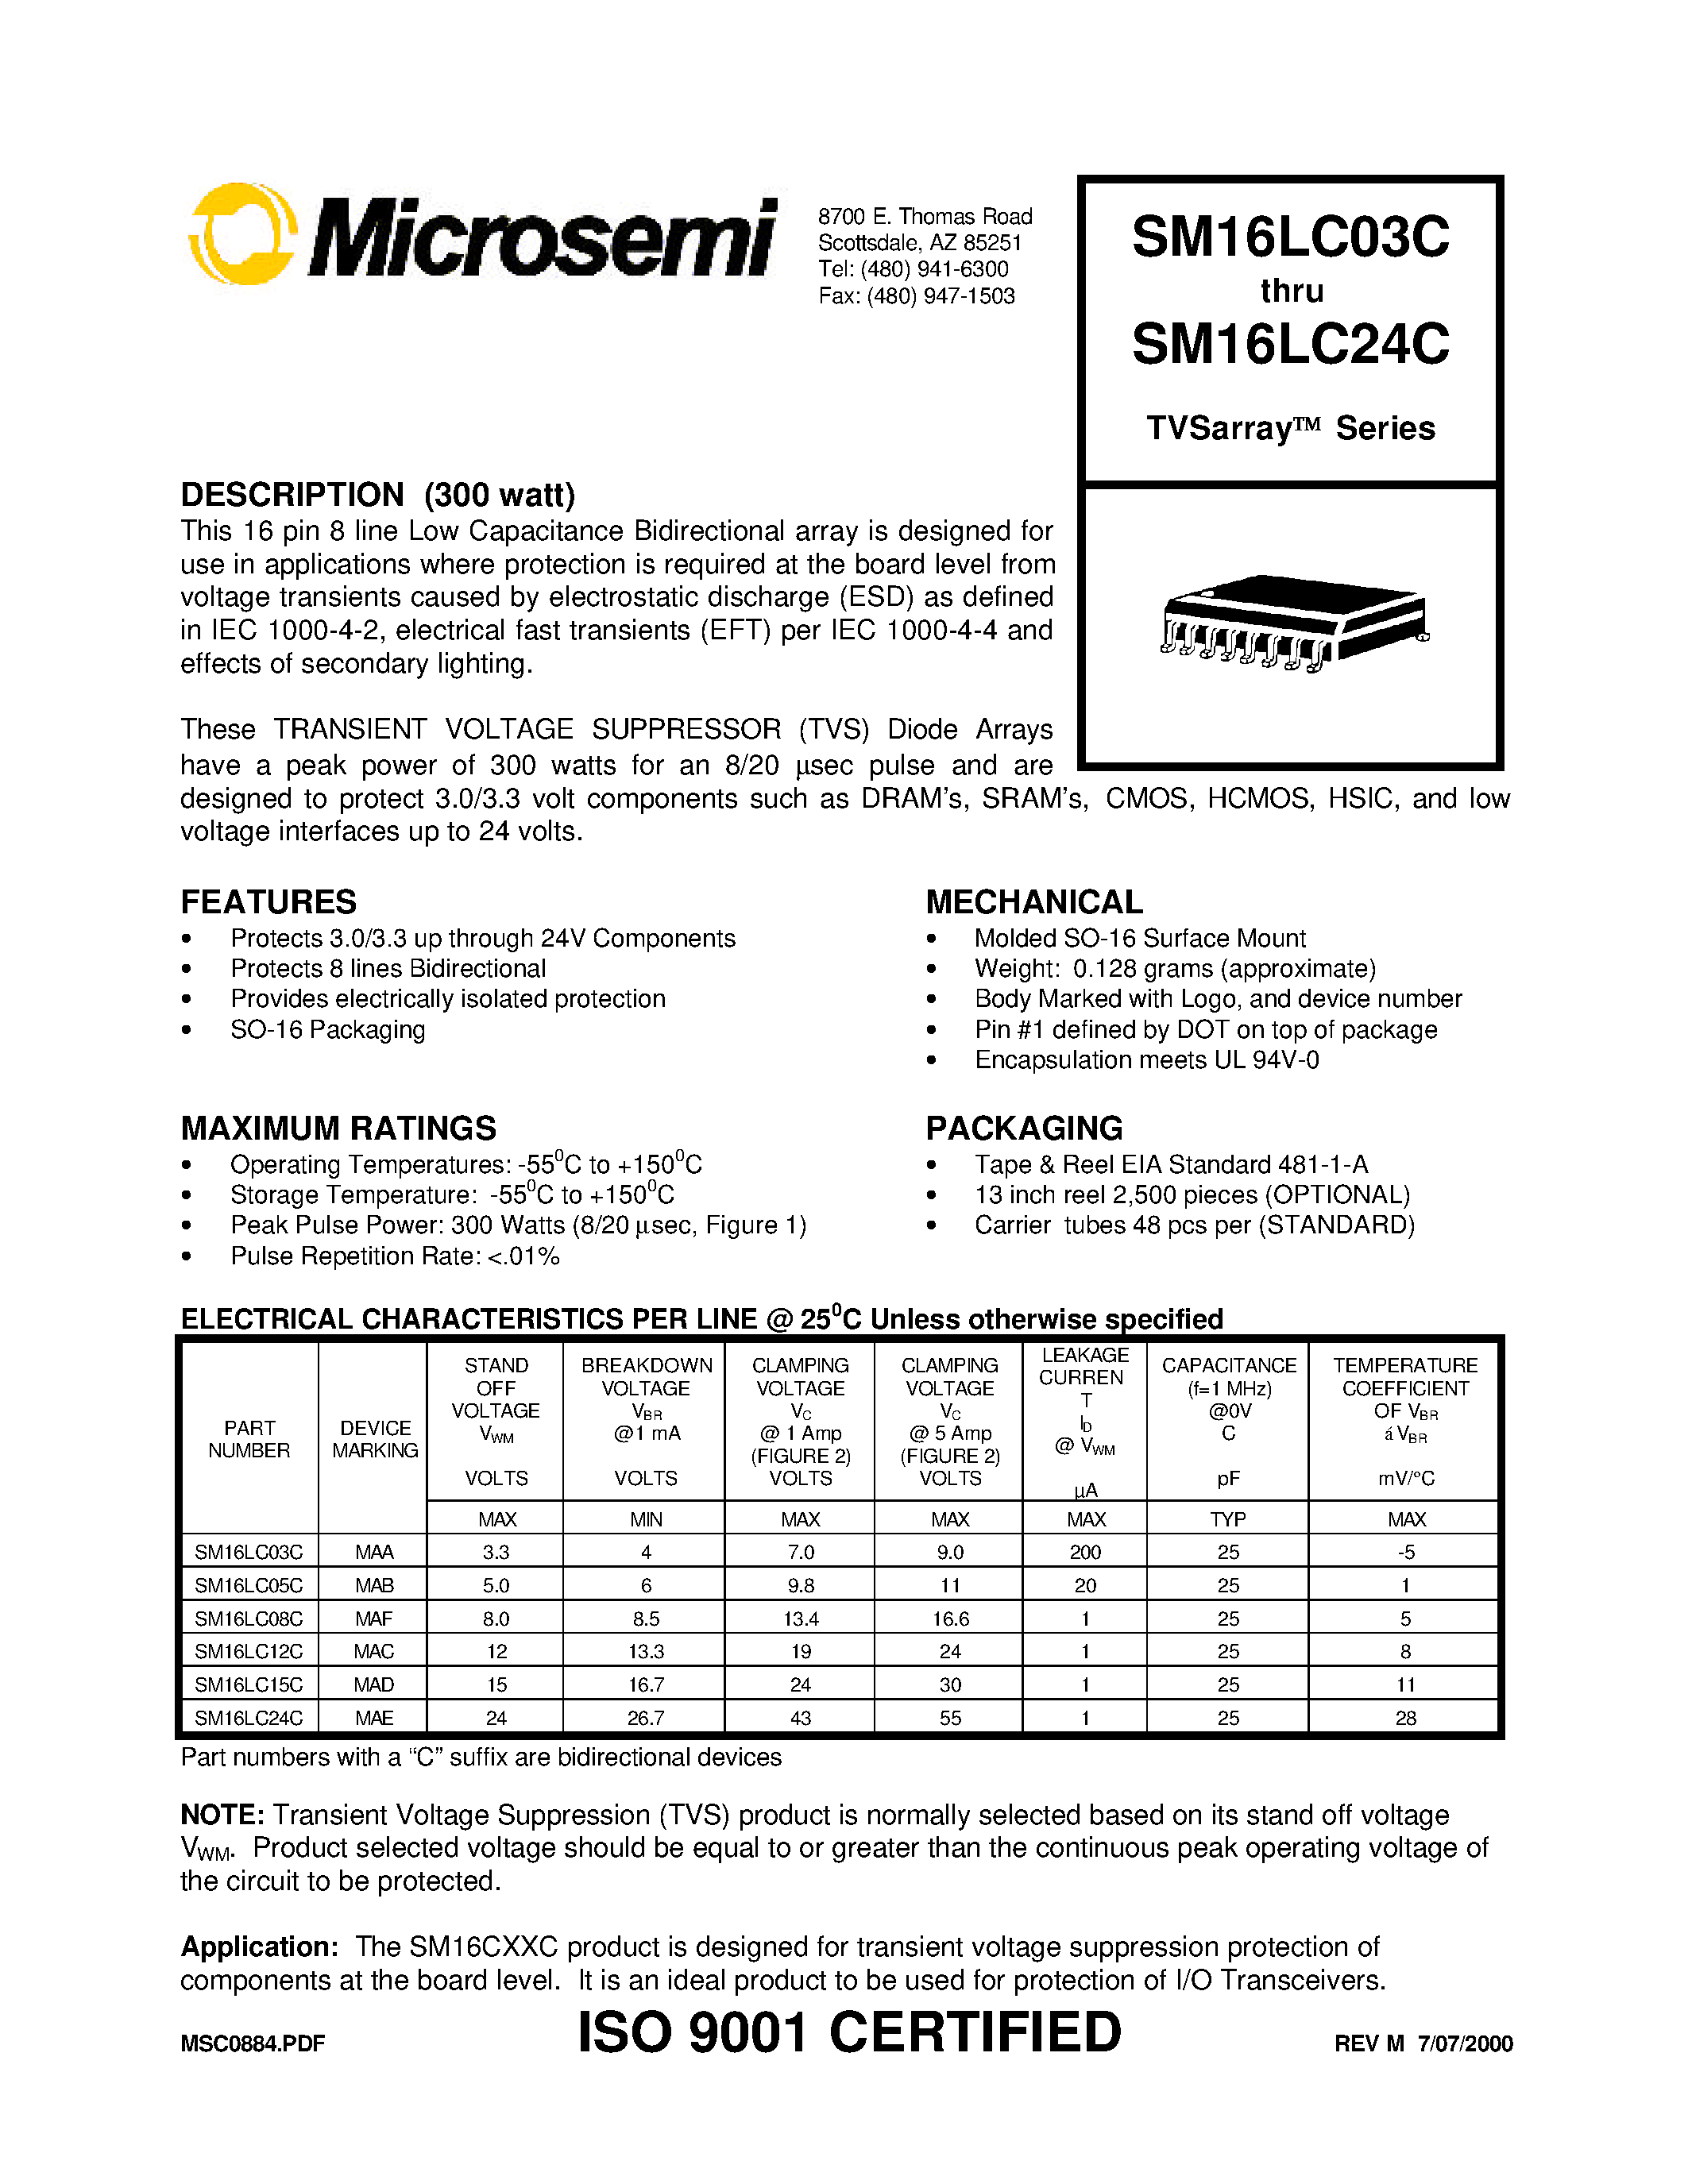 Datasheet SM16LC24C - TVSarray Series page 1